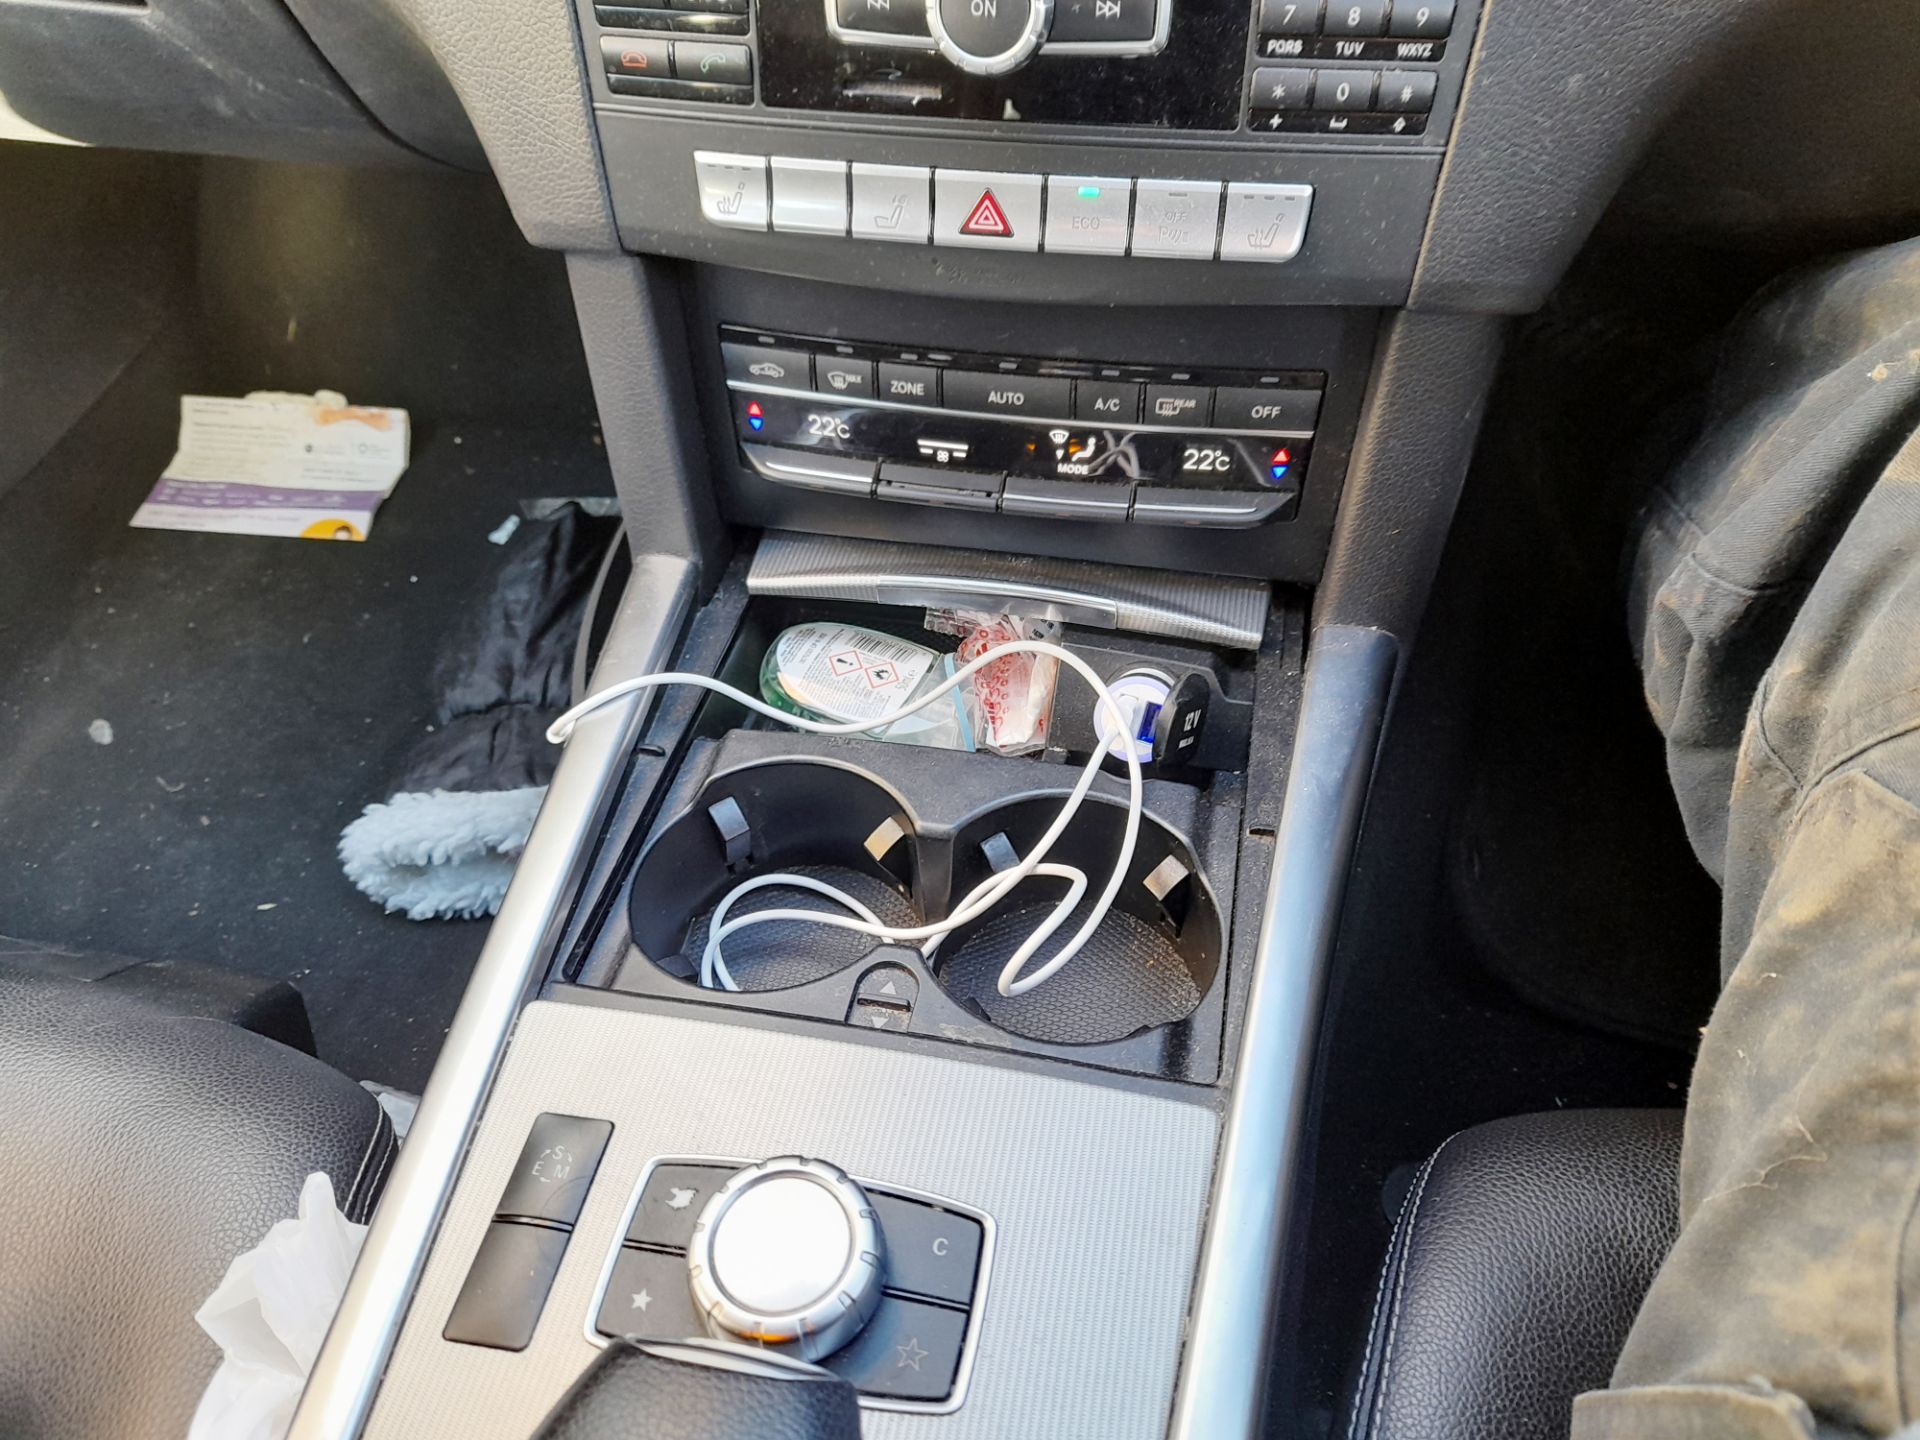 Mercedes Benz E220 AMG Sport CDI Auto Diesel 4 Door Saloon, colour grey, Registration AO63 WWM, - Image 13 of 14